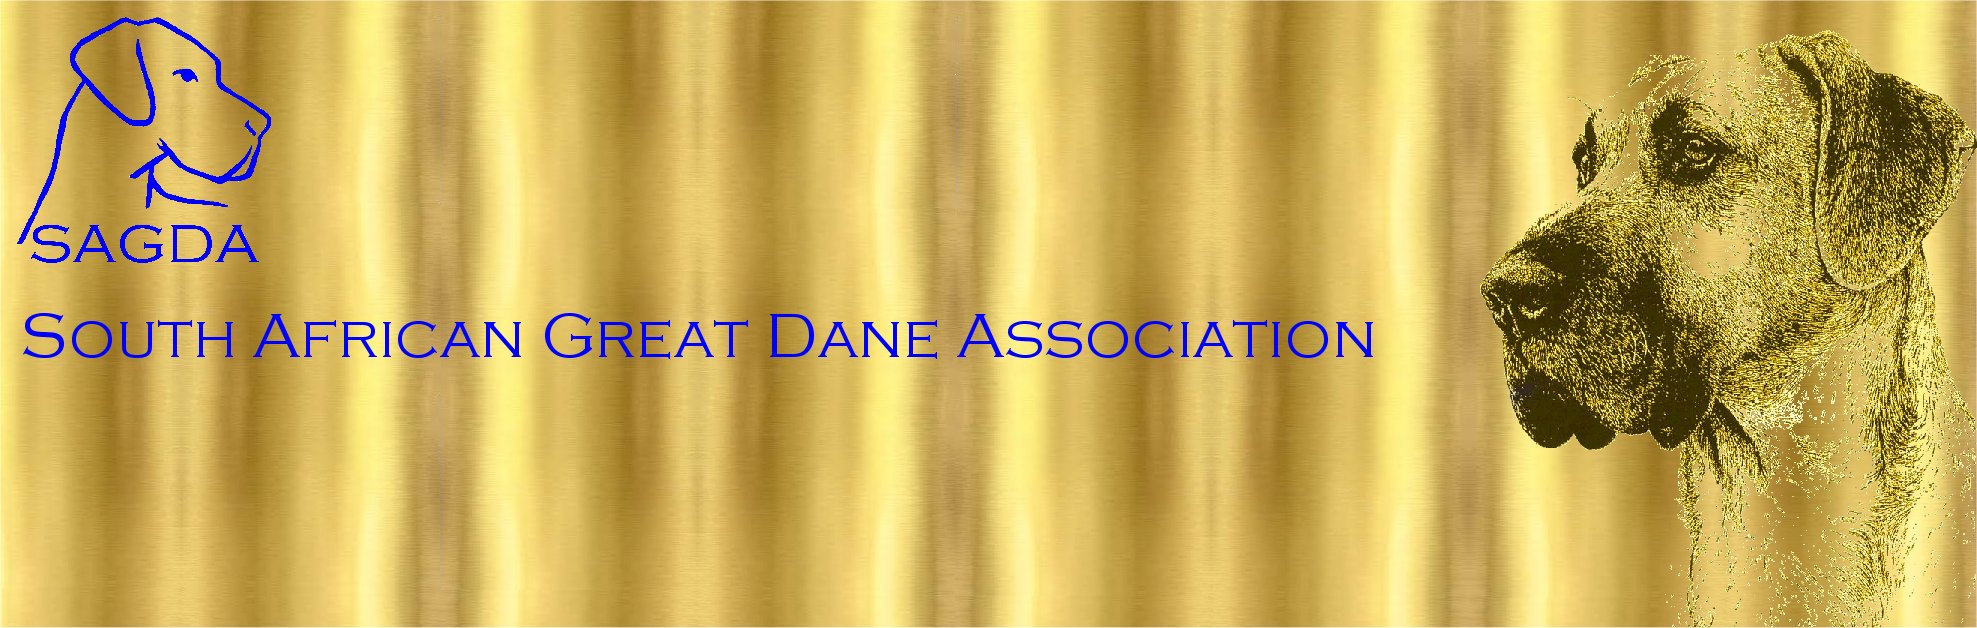 South African Great Dane Association